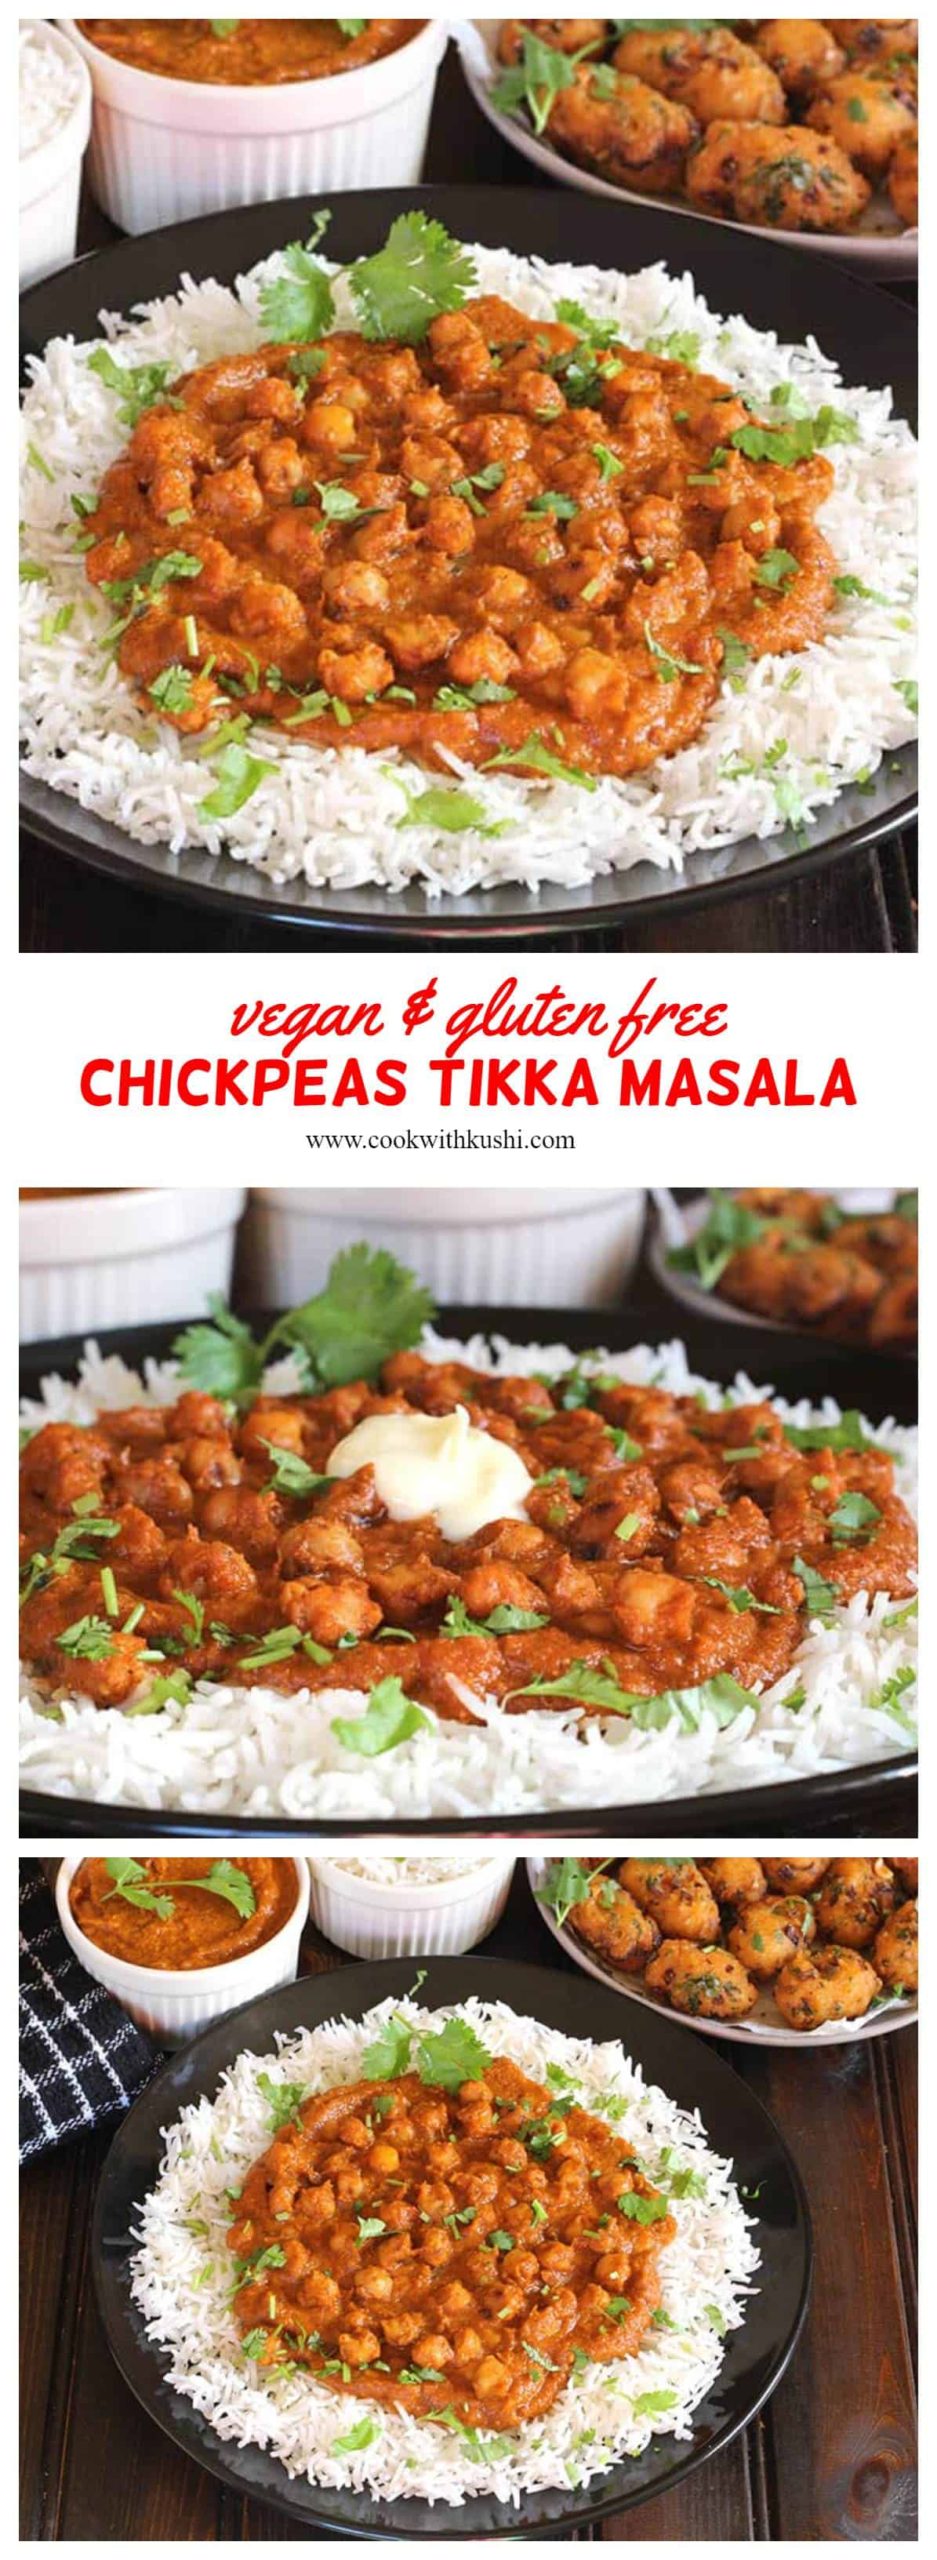 #tikkamasala #tikkasauce #chickentikka #paneertikka #vegetarianmeals #vegandinner #veganrecipes #indianrecipes #lunchrecipes #vegetarianmeal #cholerecipes #chickpeastikkamasala #choletikkamasala